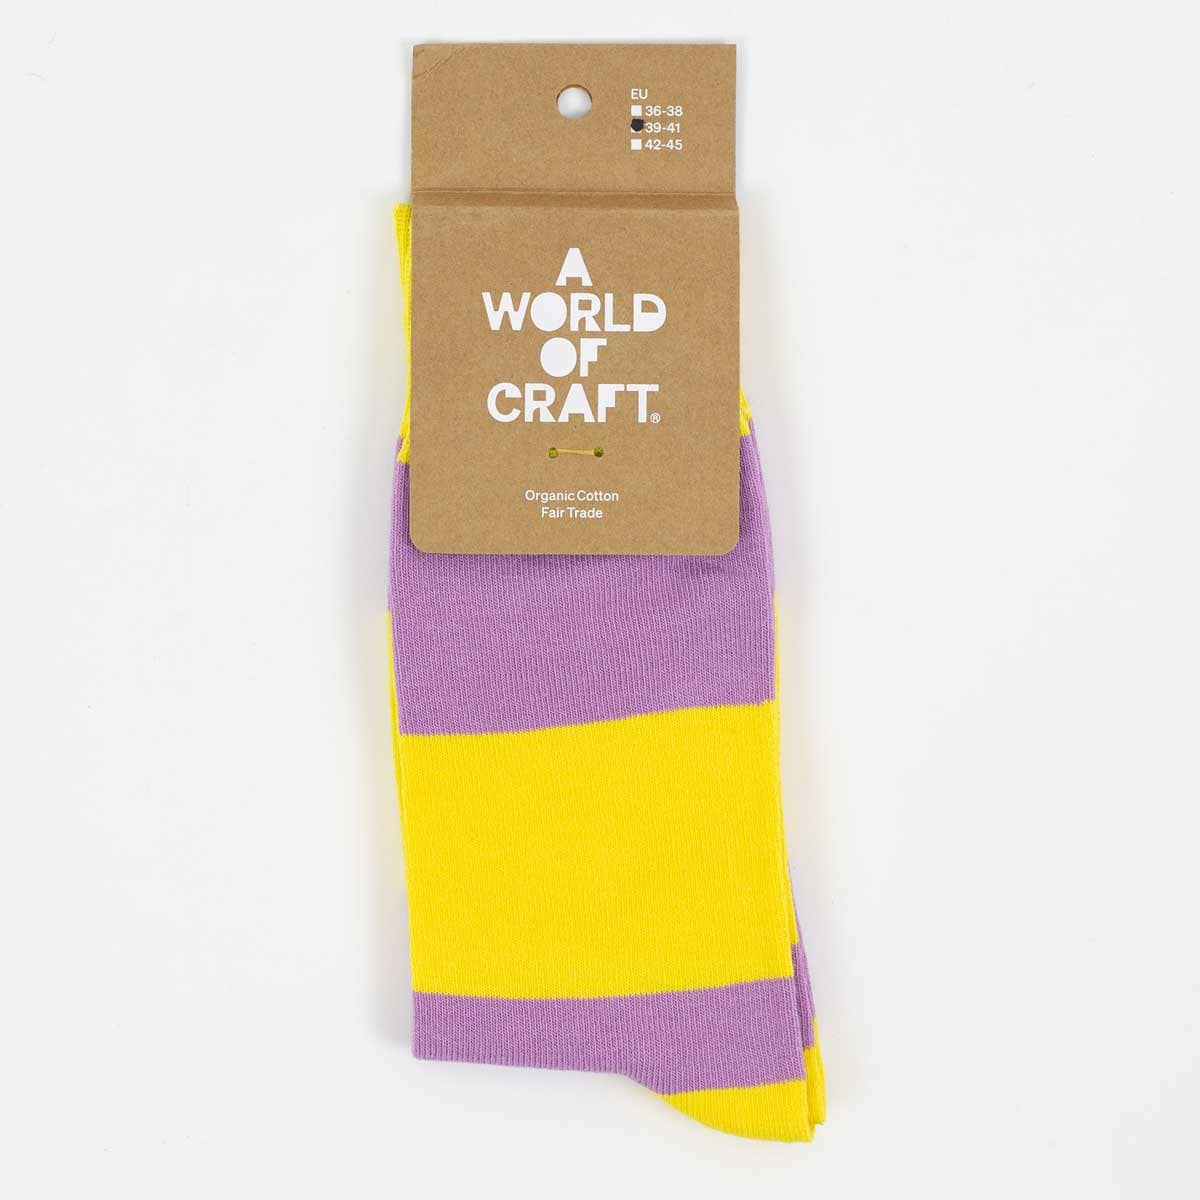 AWOC Socks, yellow/lilac